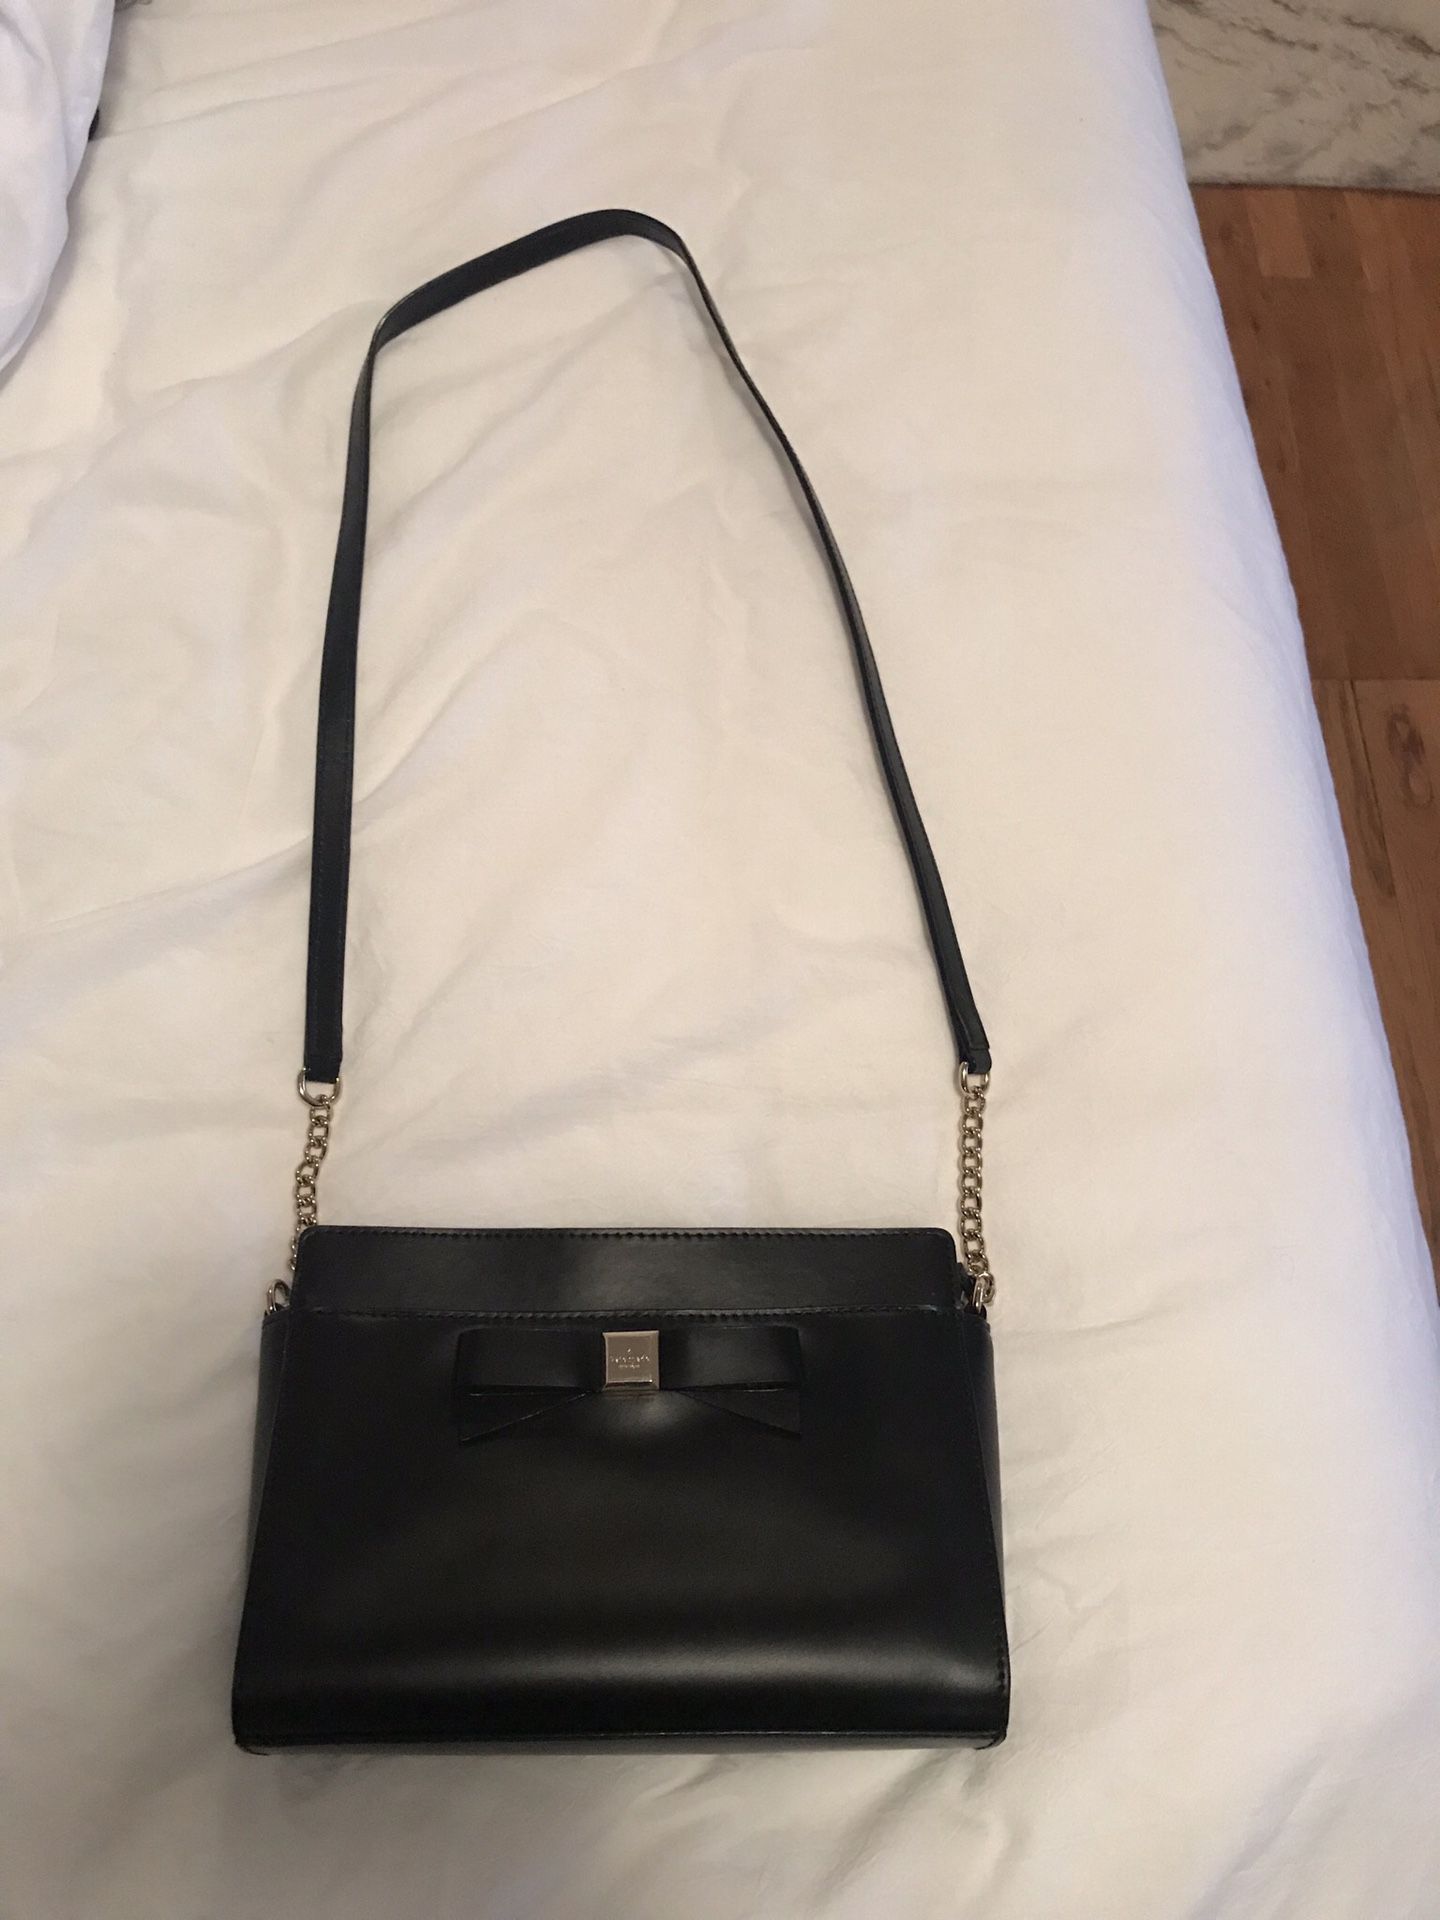 Kate Spade black leather purse